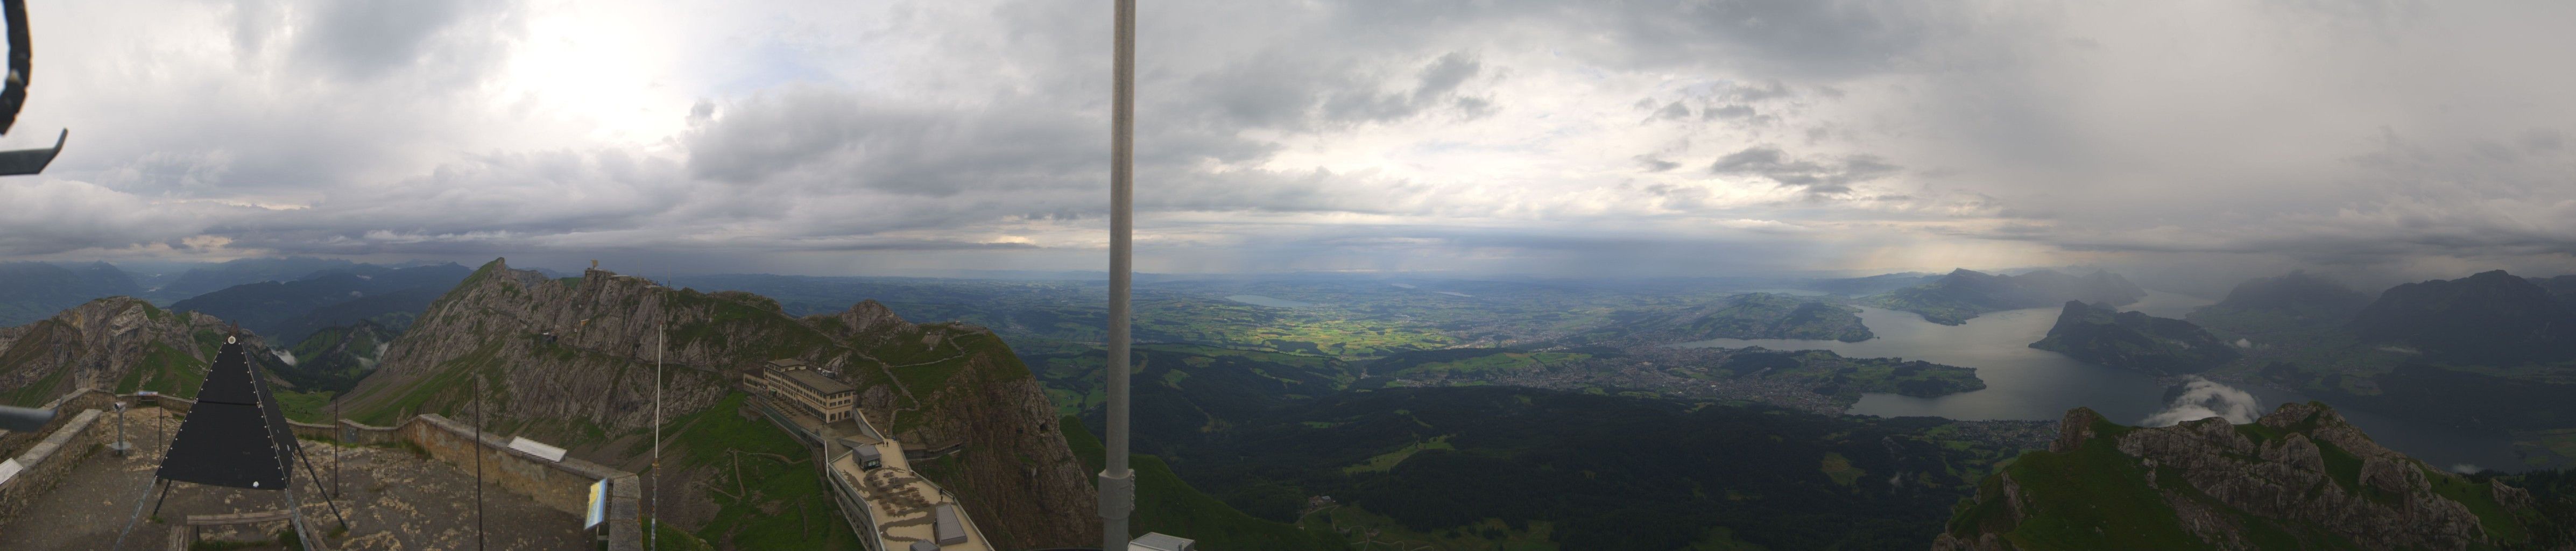 Alpnach: Pilatus Kulm - Bürgenstock - Lucerne - Vierwaldstättersee - Rigi Kulm